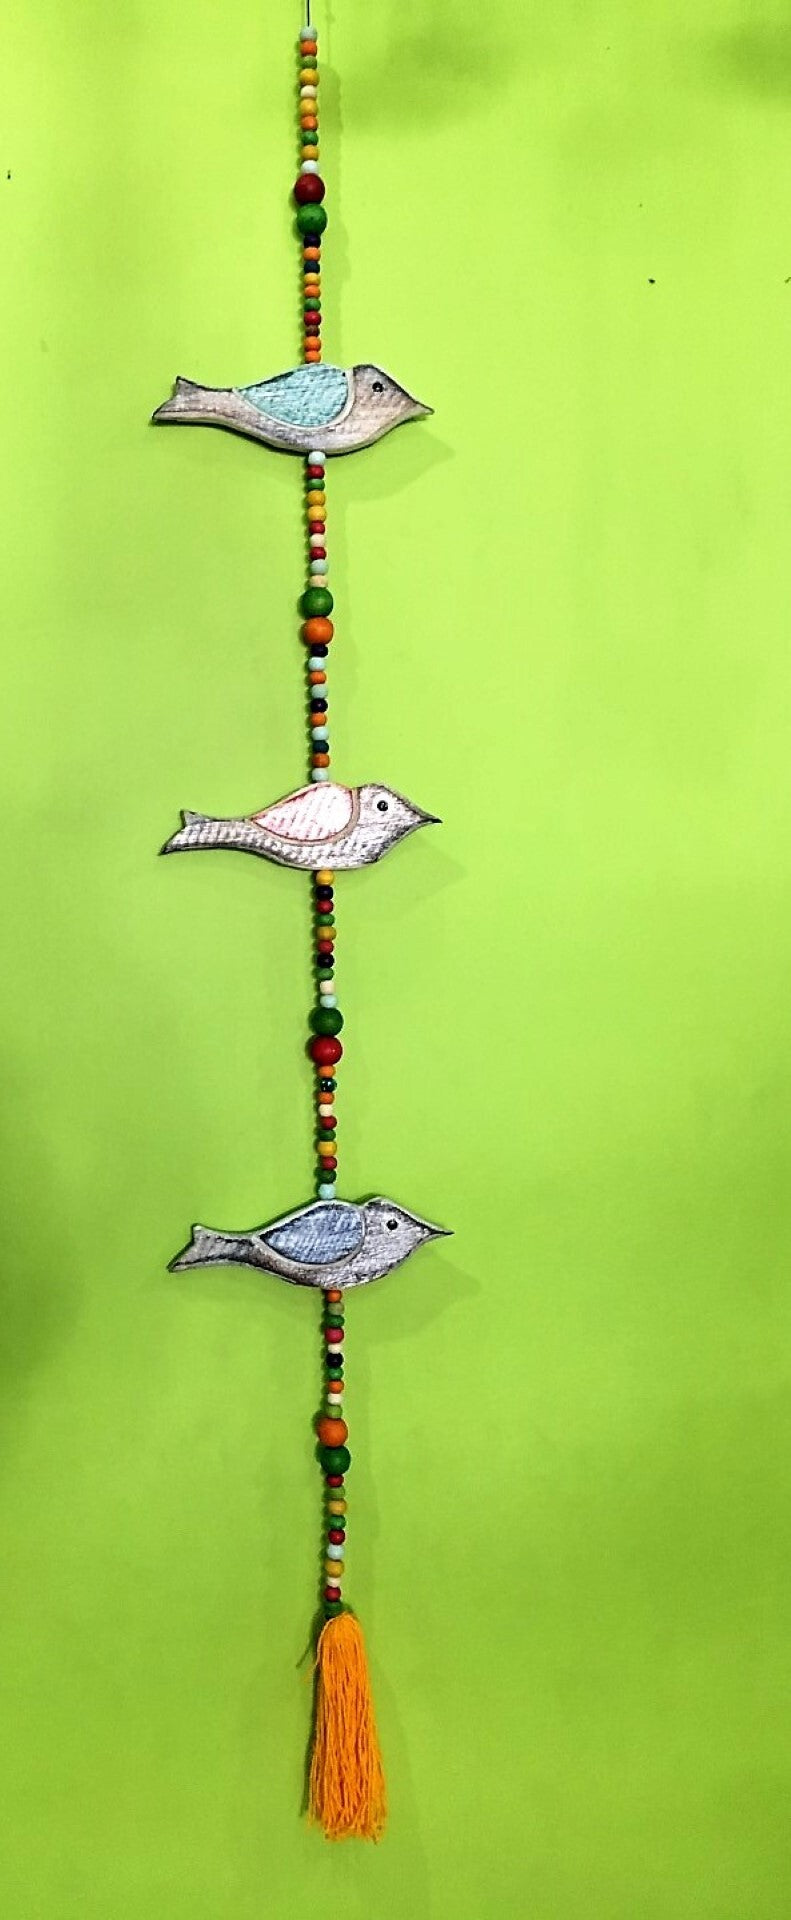 hanging - 3 lg bird w/ wood beads/string tassle - 1m - mix colour